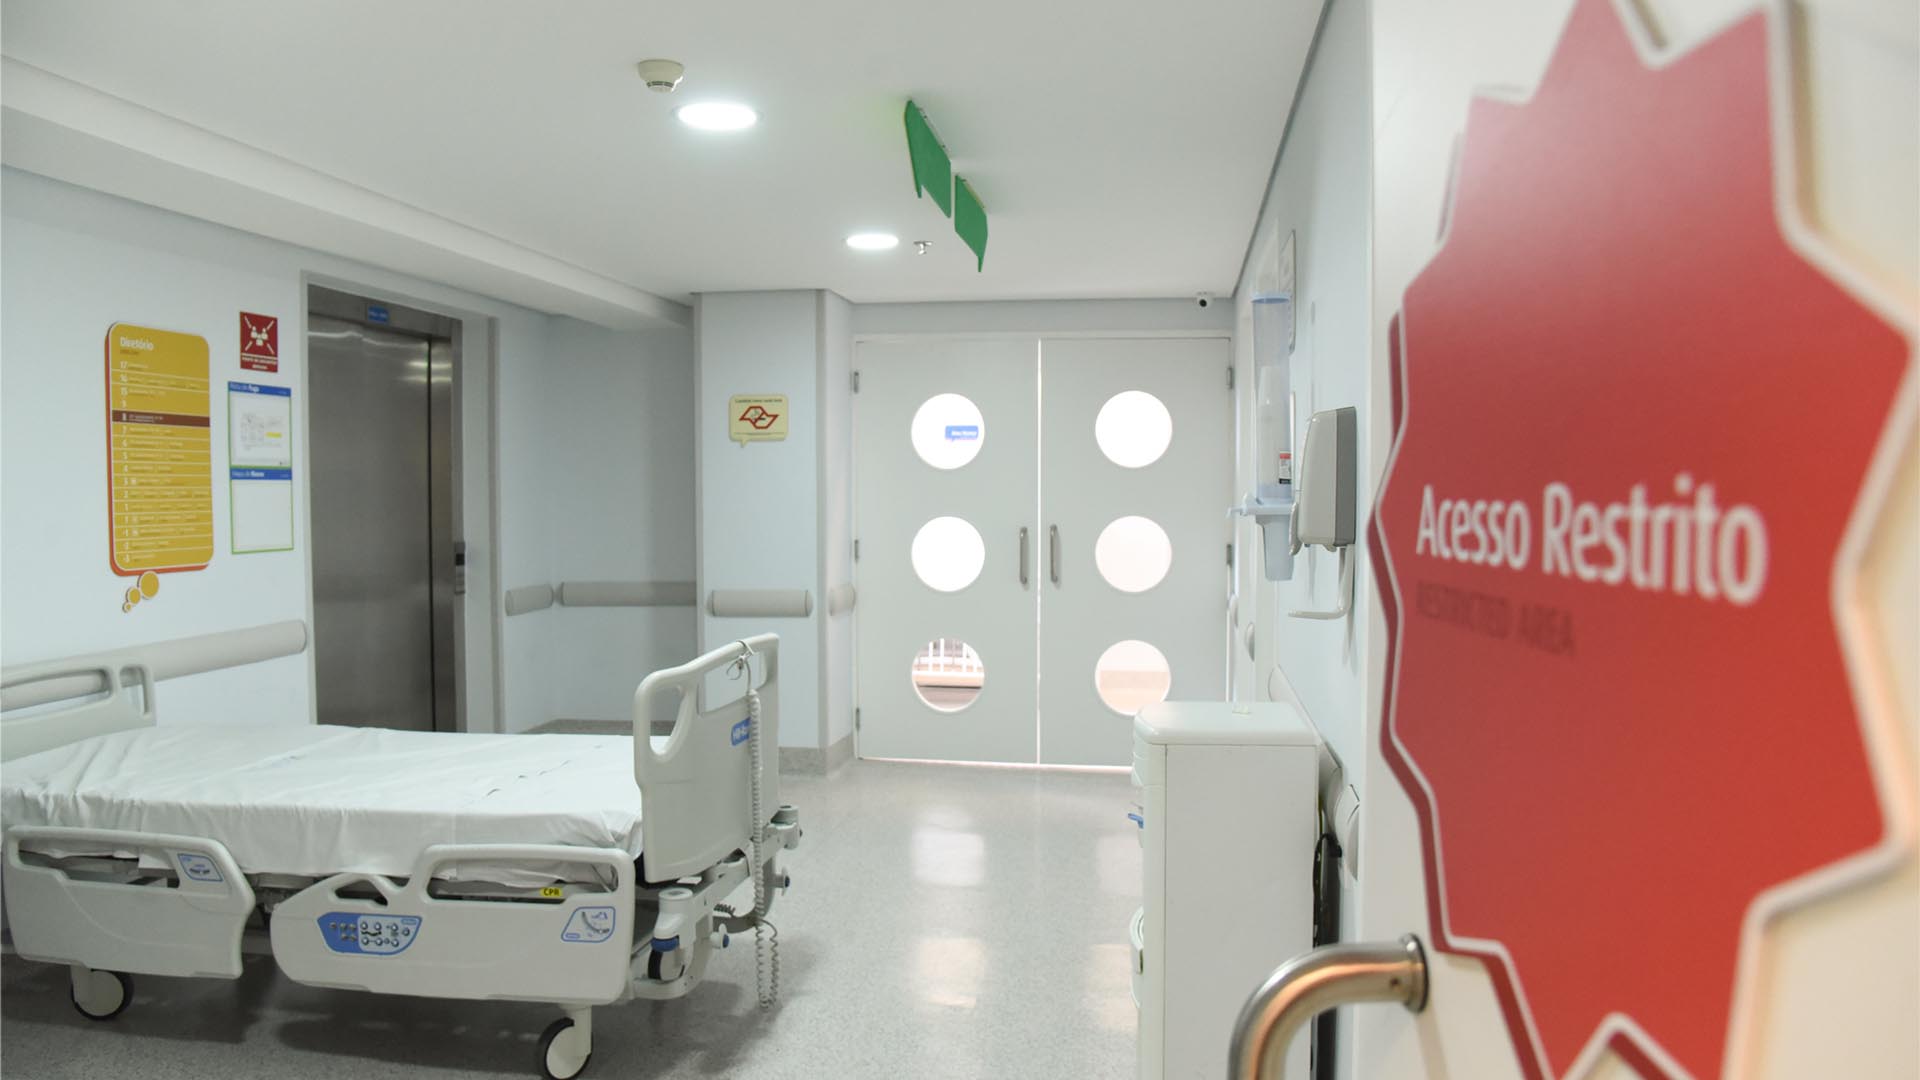 Hospital Sabara